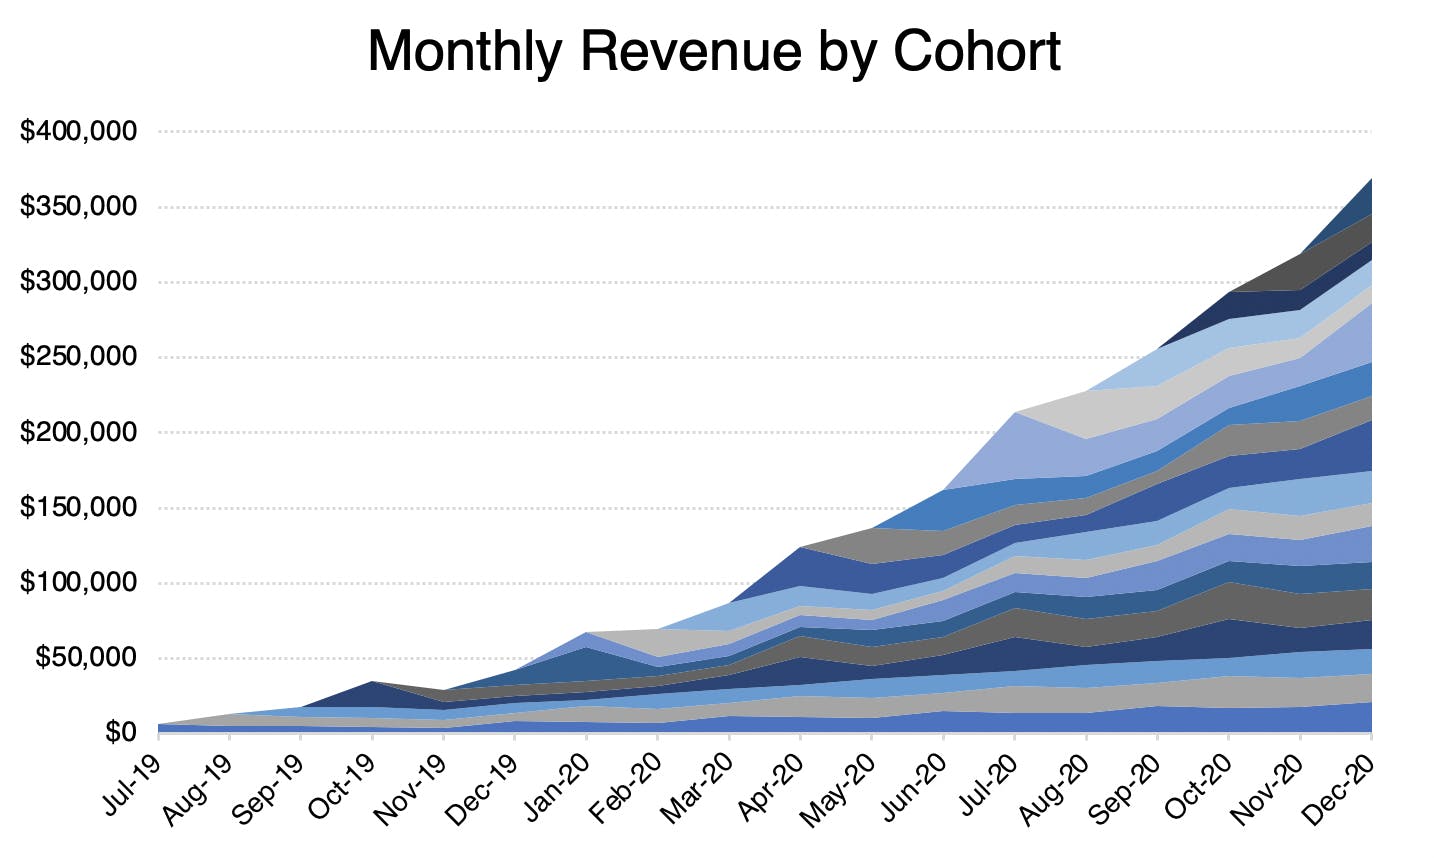 Figure: Monthly revenue by cohort